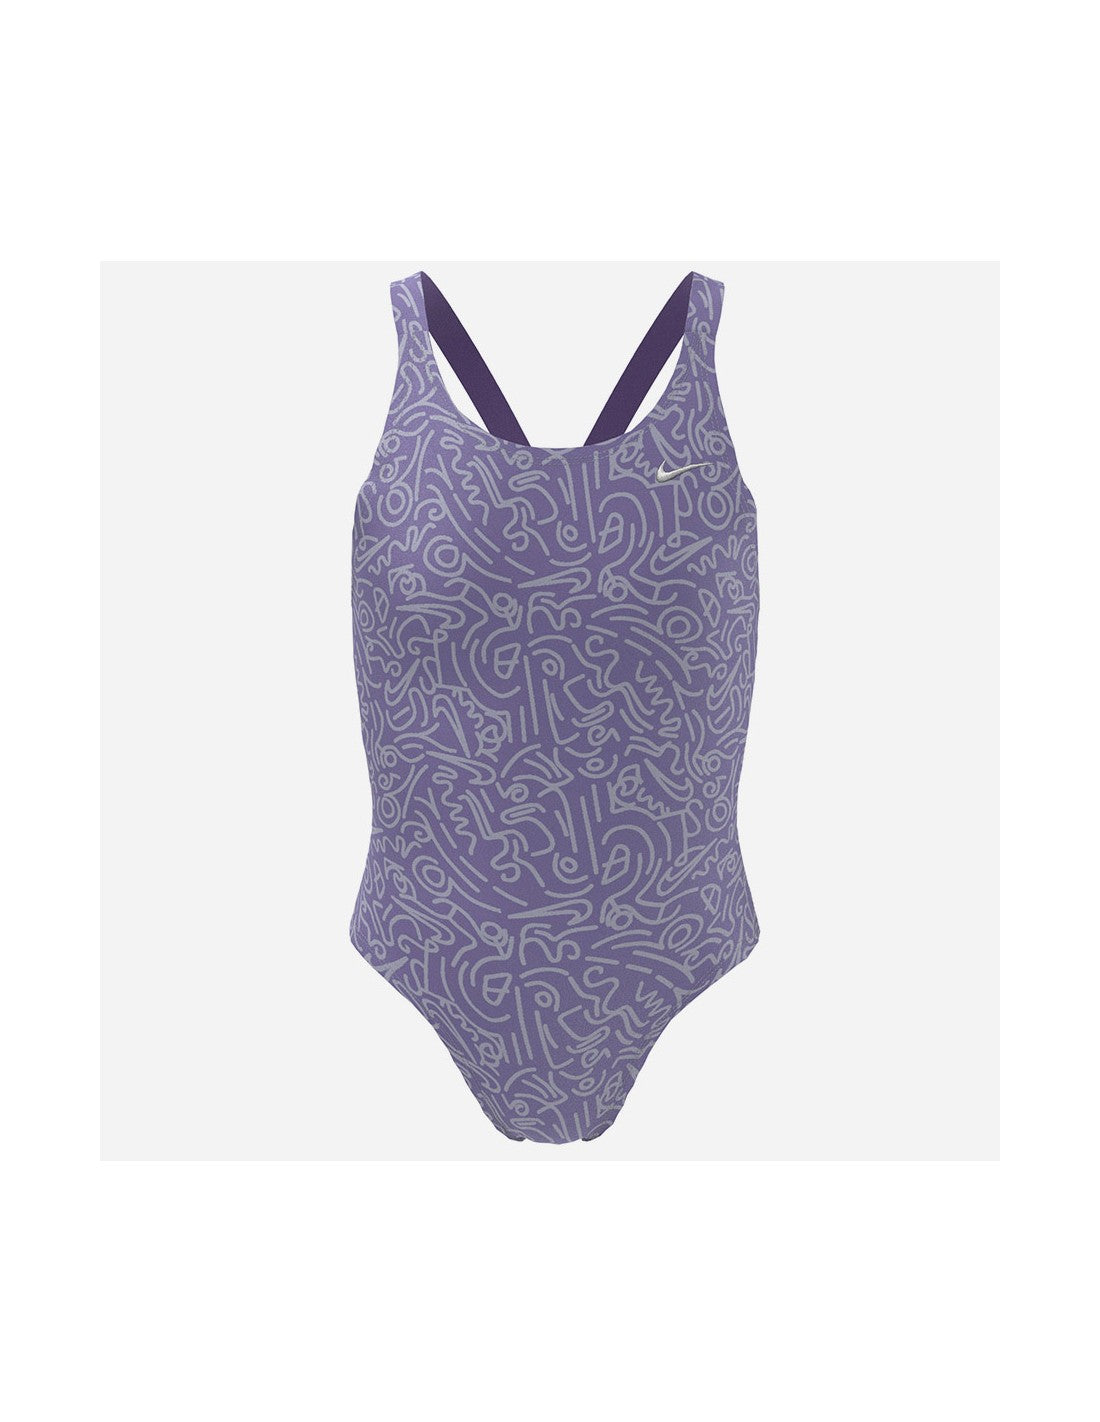 Nike Swim, Hydrastrong Multi Print Badeanzug, Kinder, violett/gemustert